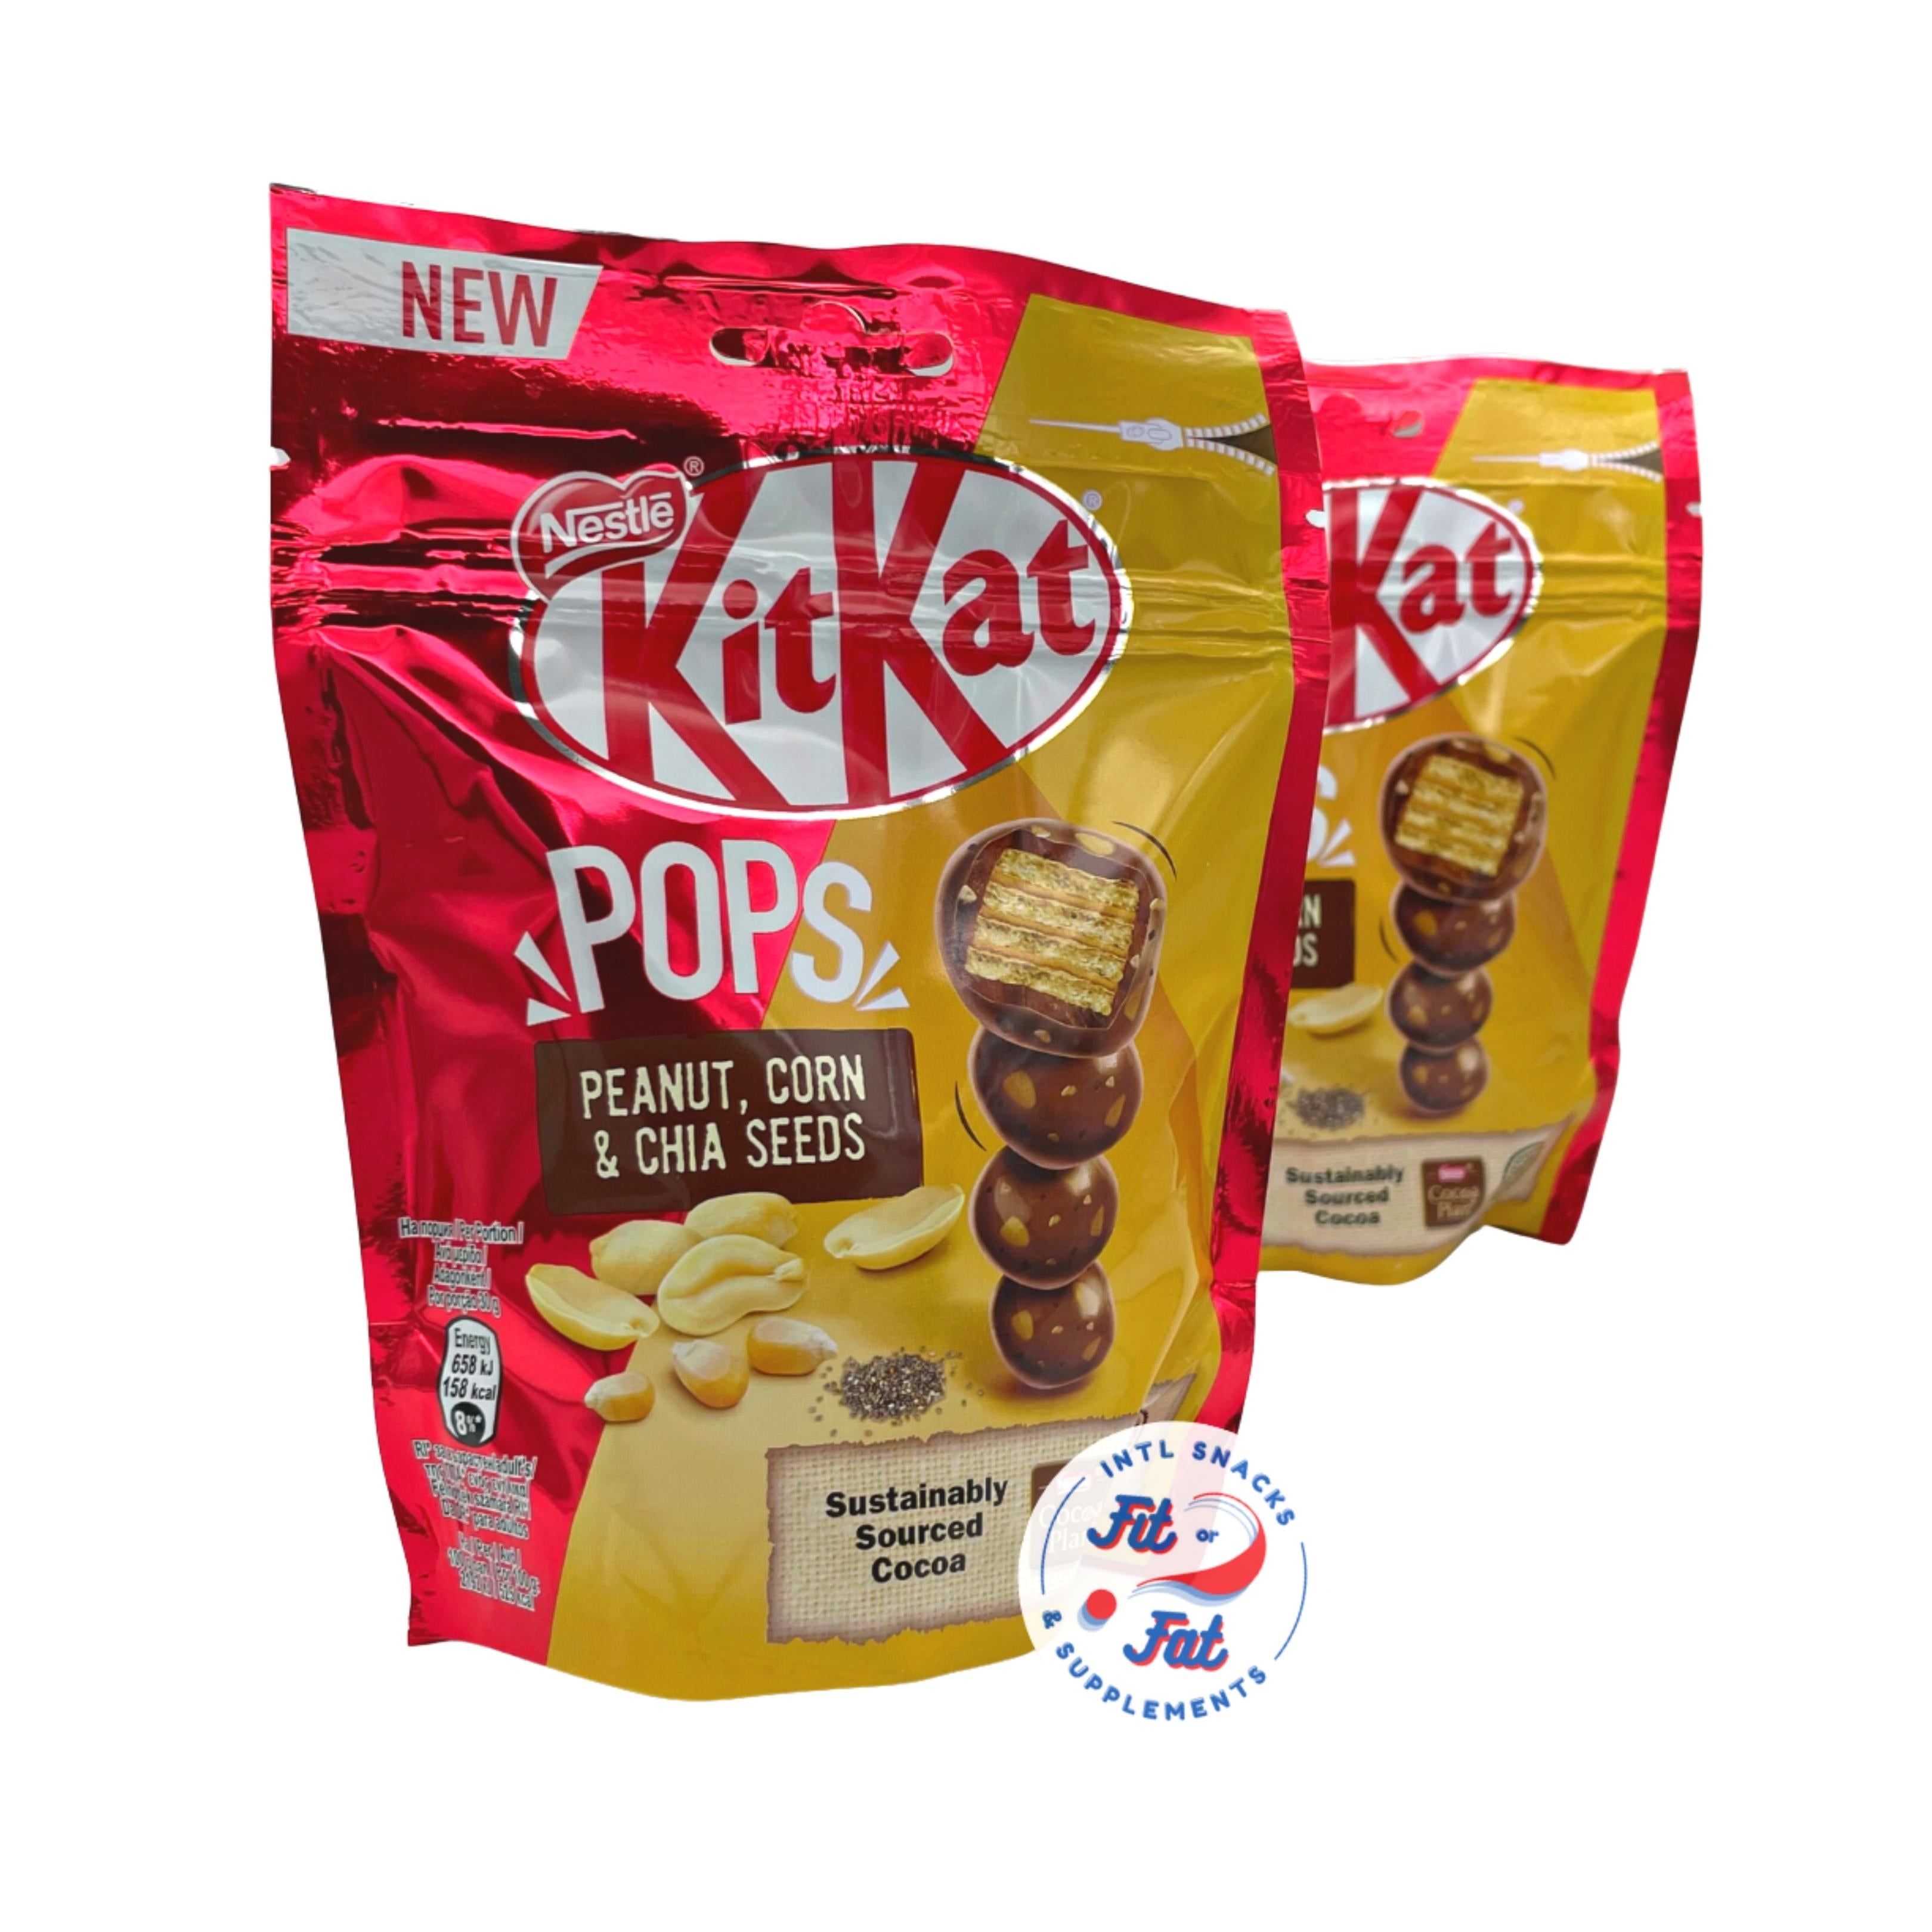 Kit Kat - Pops Peanut, Corn & Chia Seeds